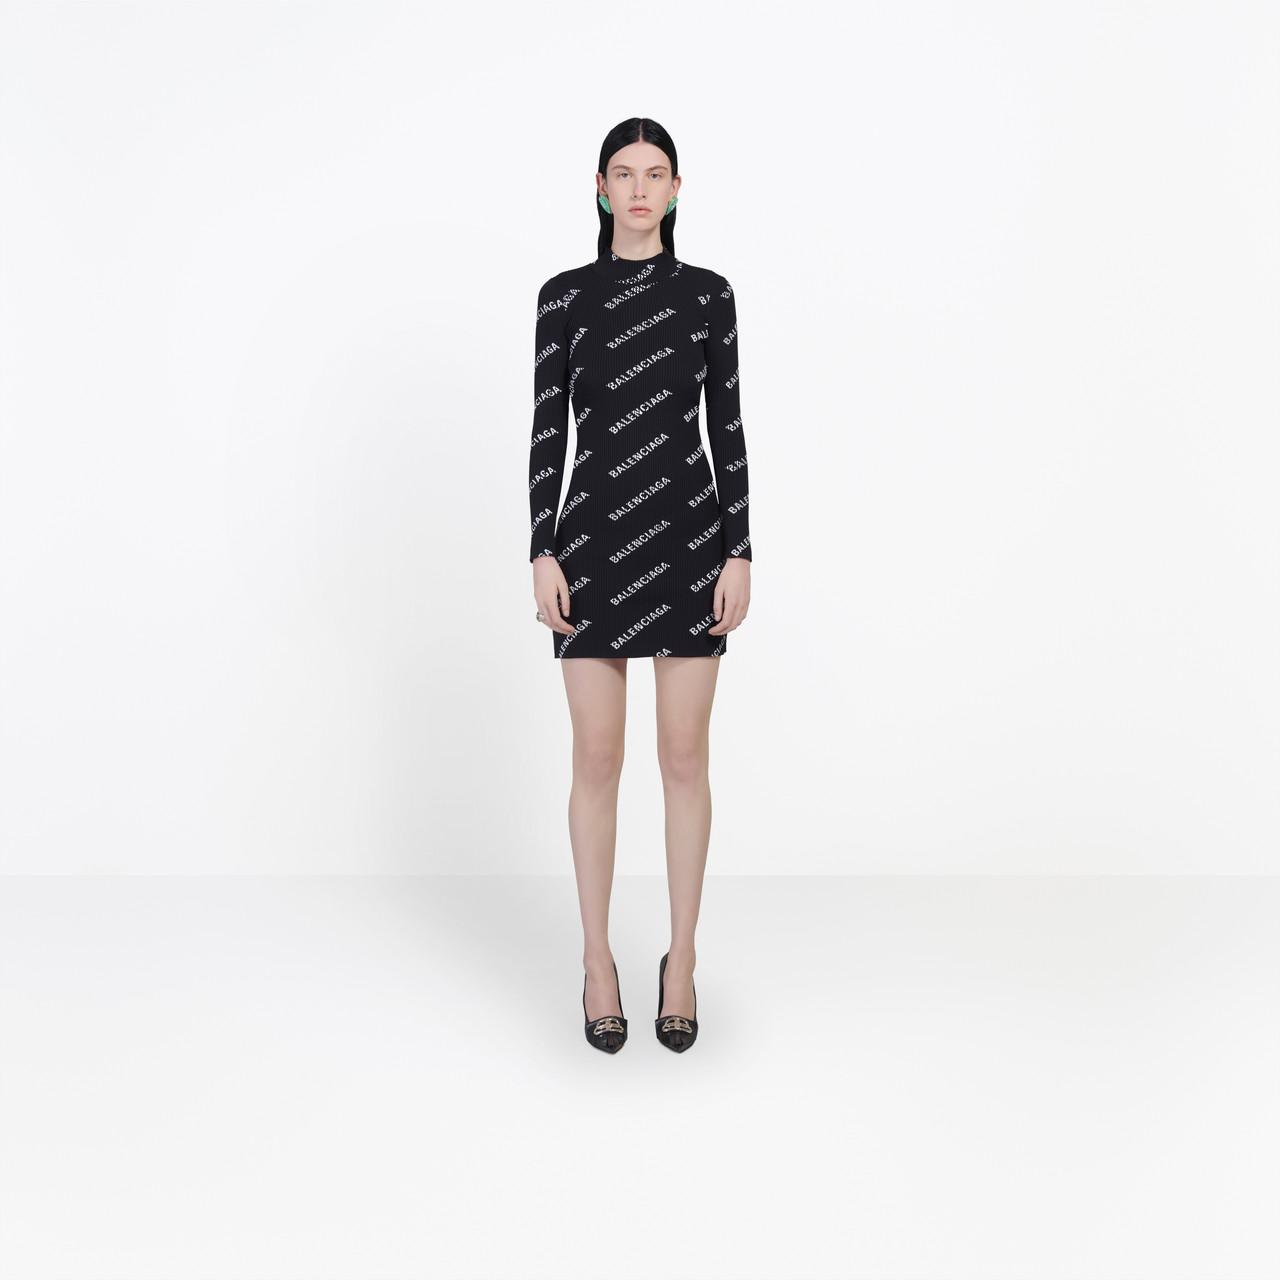 Balenciaga Logo Dress Sale Now, 56% OFF | thisweekinswingnyc.com